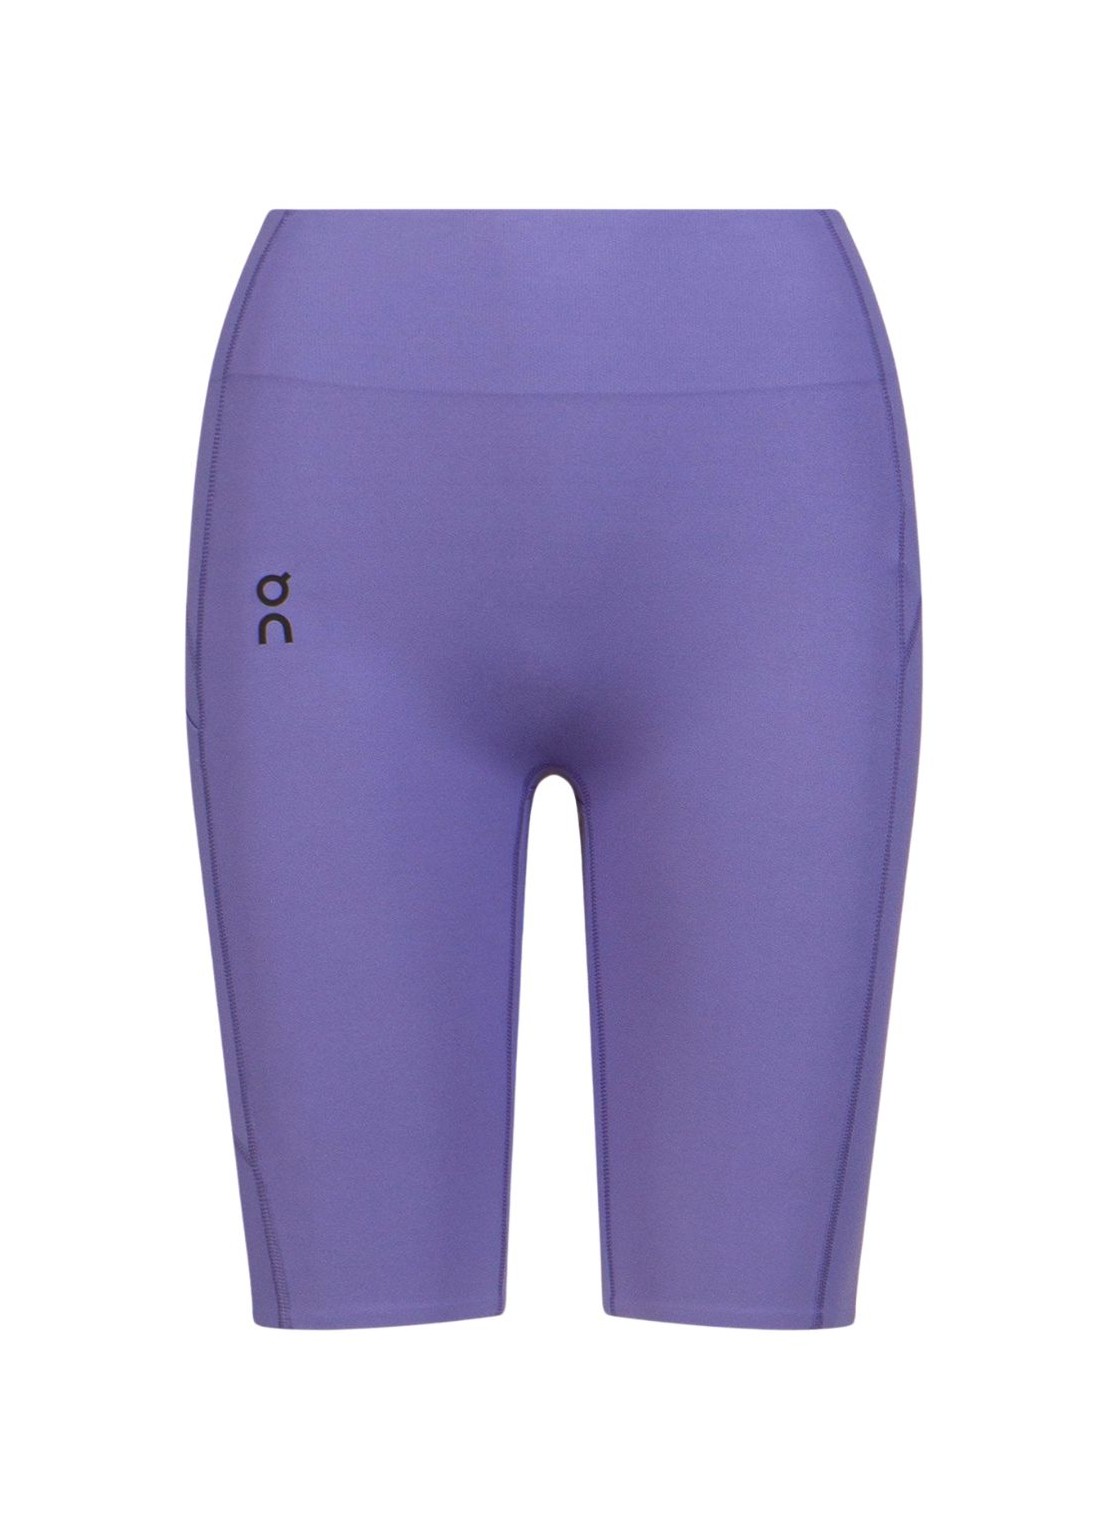 Pantalon corto on running short pant womanmovement tights short - 1we11911938 blueberry talla XS
 